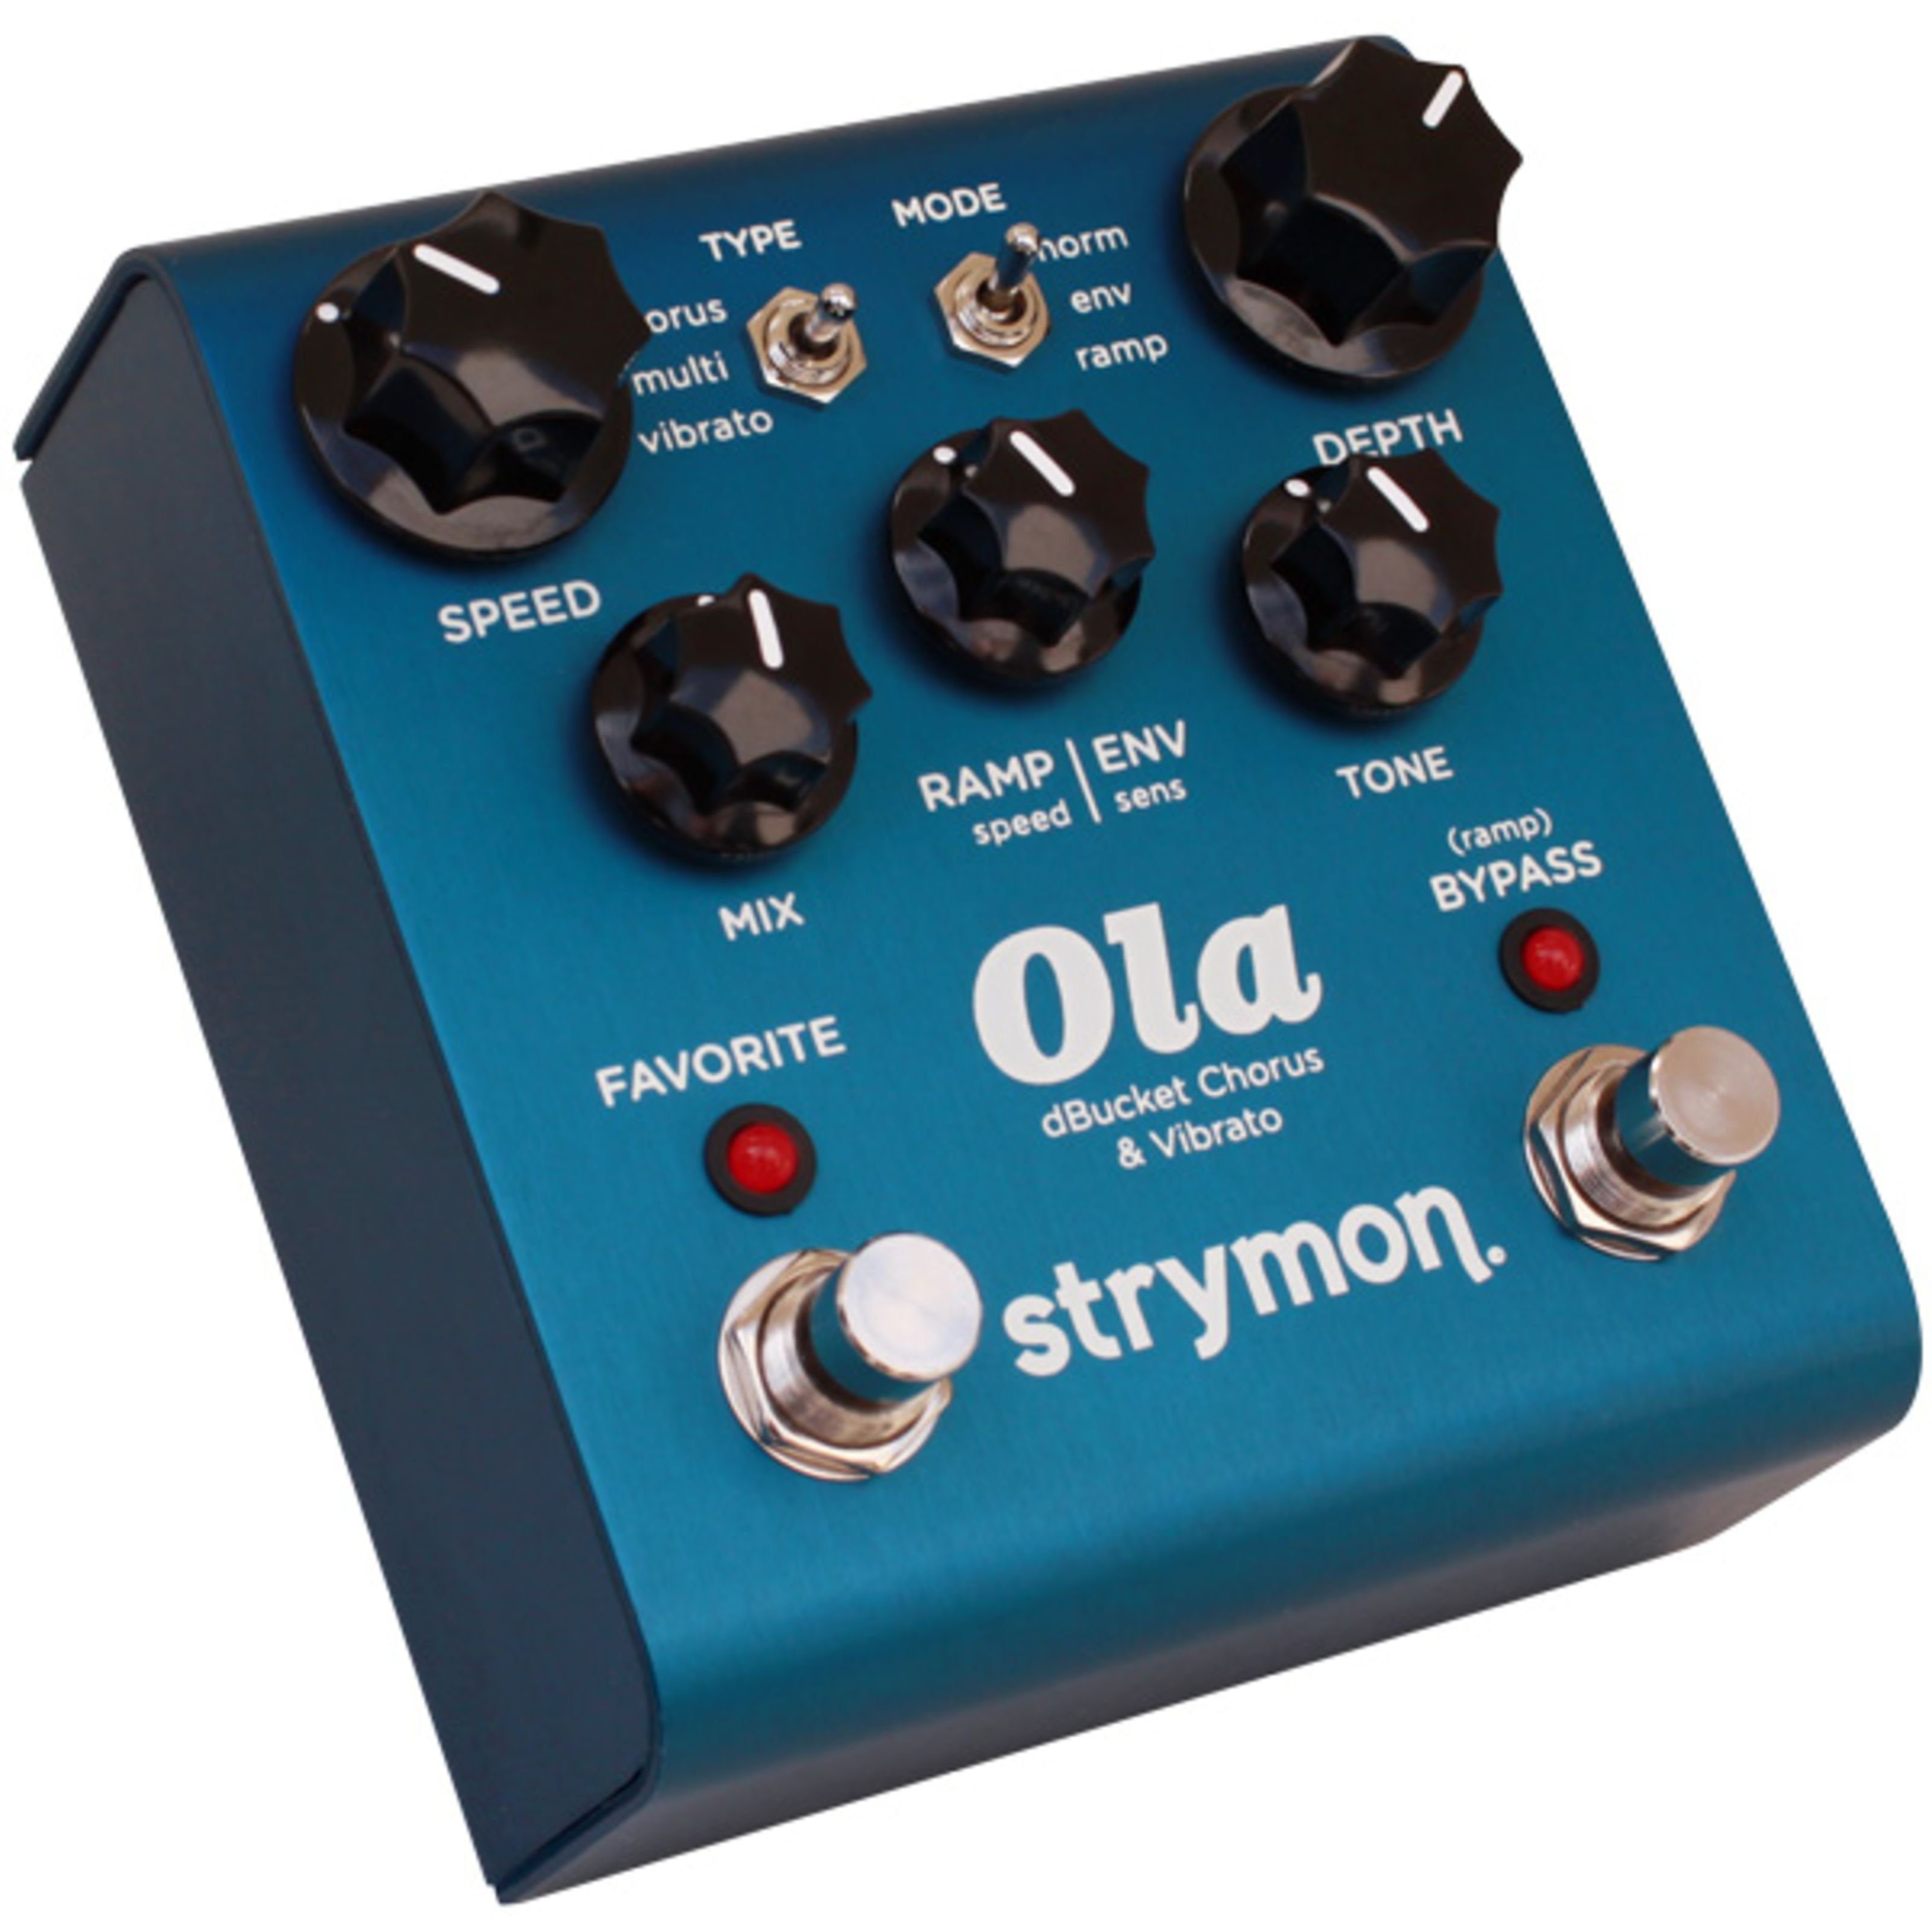 Strymon Musikinstrumentenpedal, Ola dBucket Chorus / Vibrato - Modulations Effektgerät für Gitarren